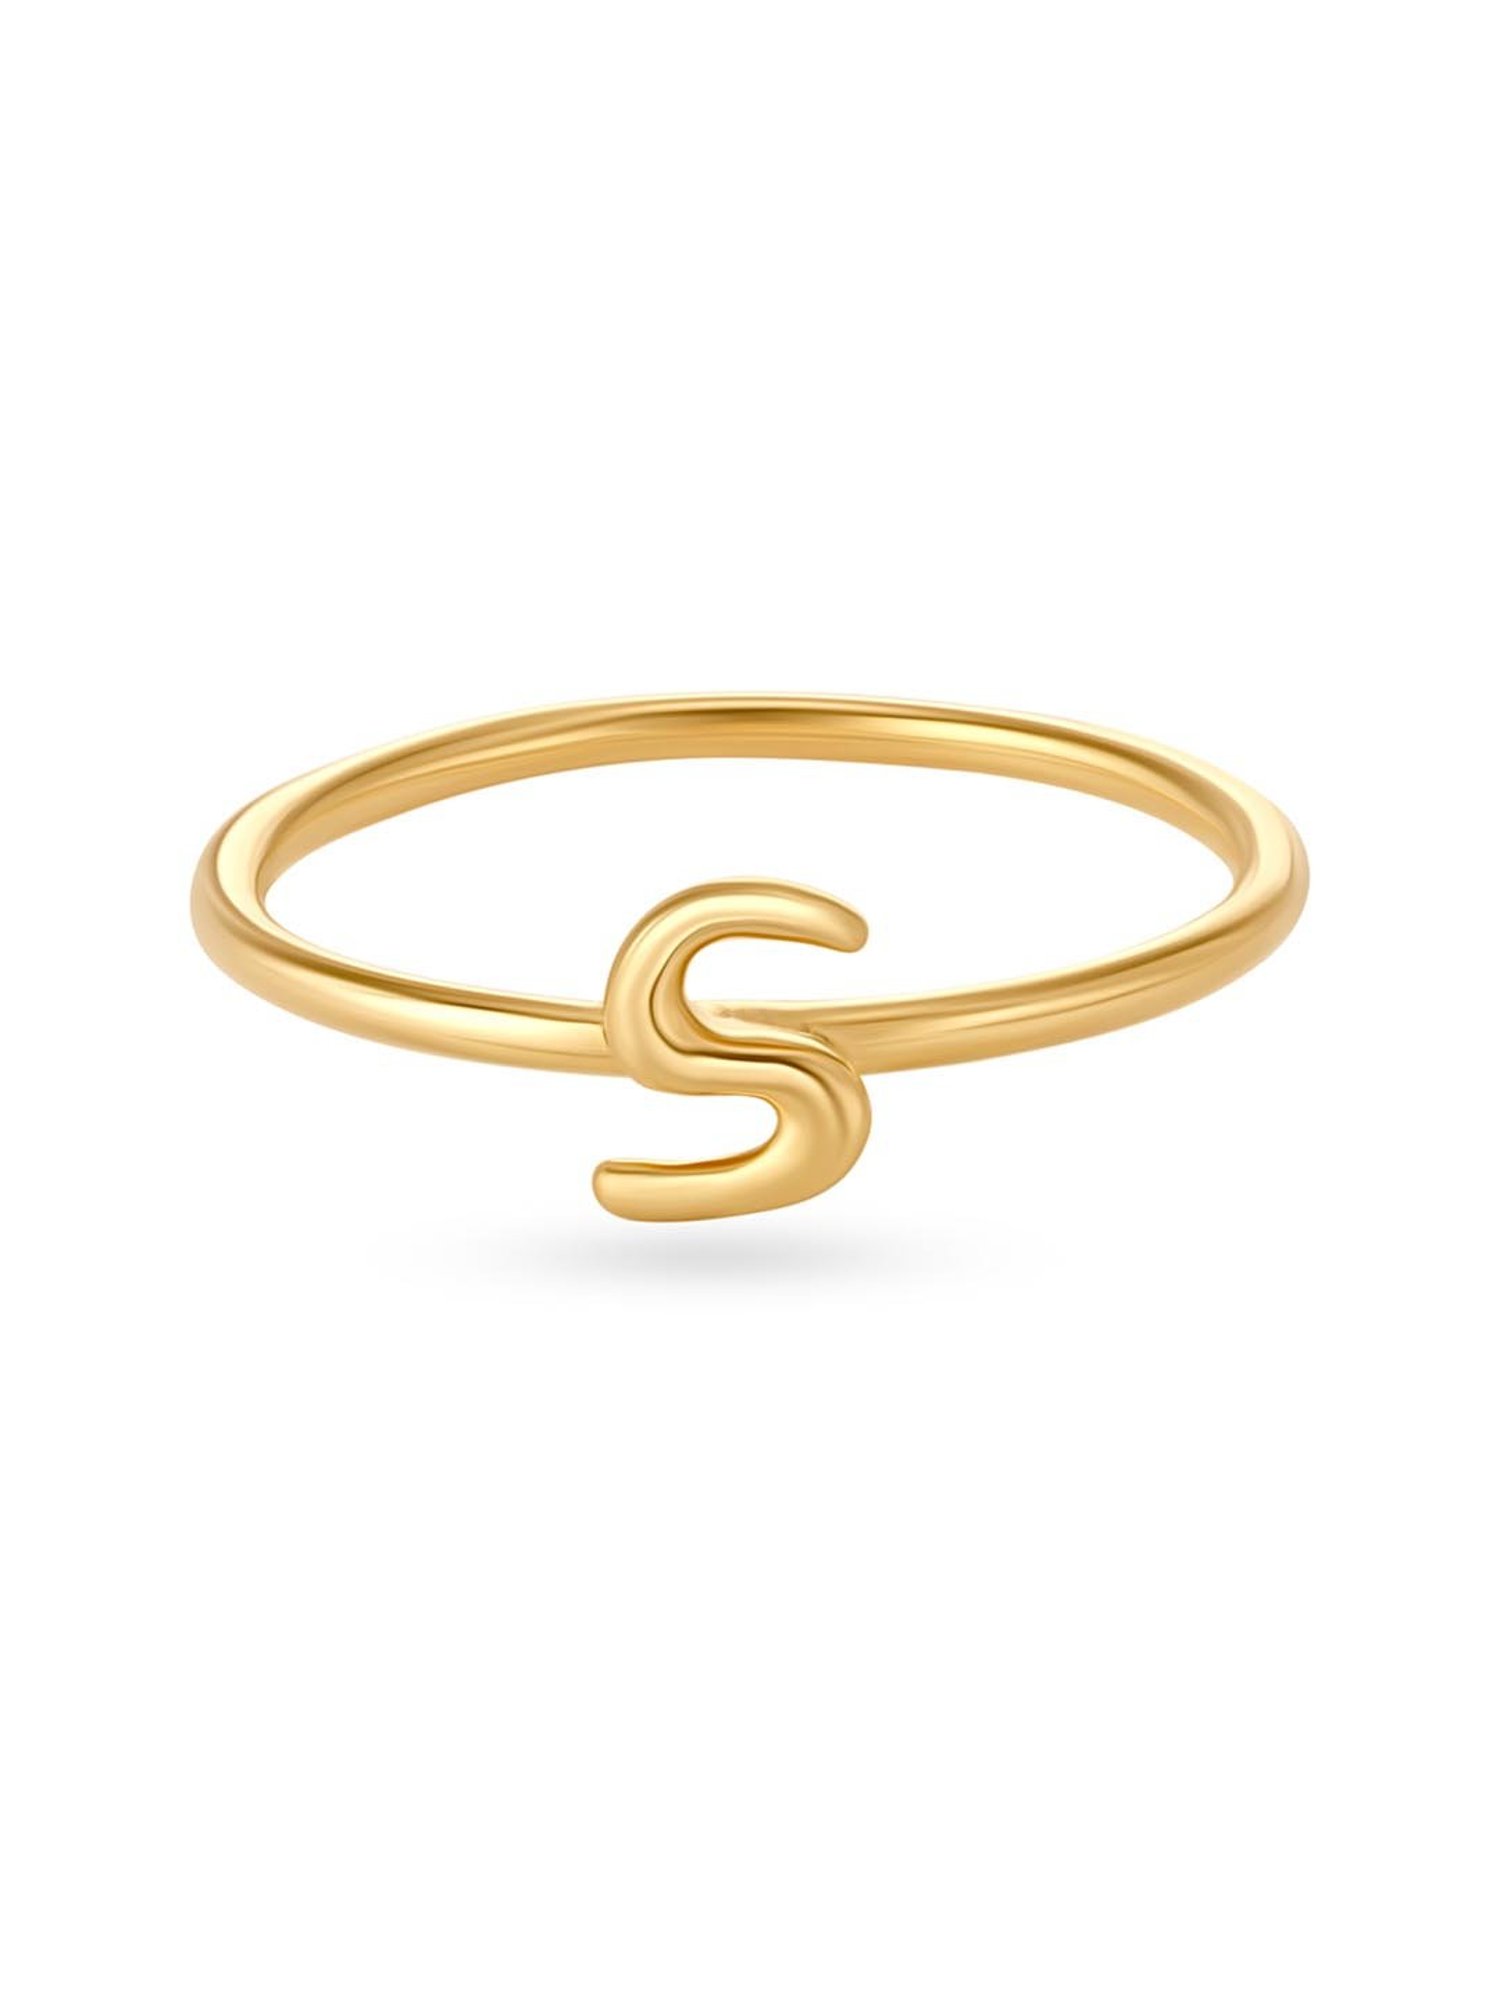 Stuller Freeform Ring 5229:11163:P 10KY - Fashion Rings | Grogan Jewelers |  Florence, AL